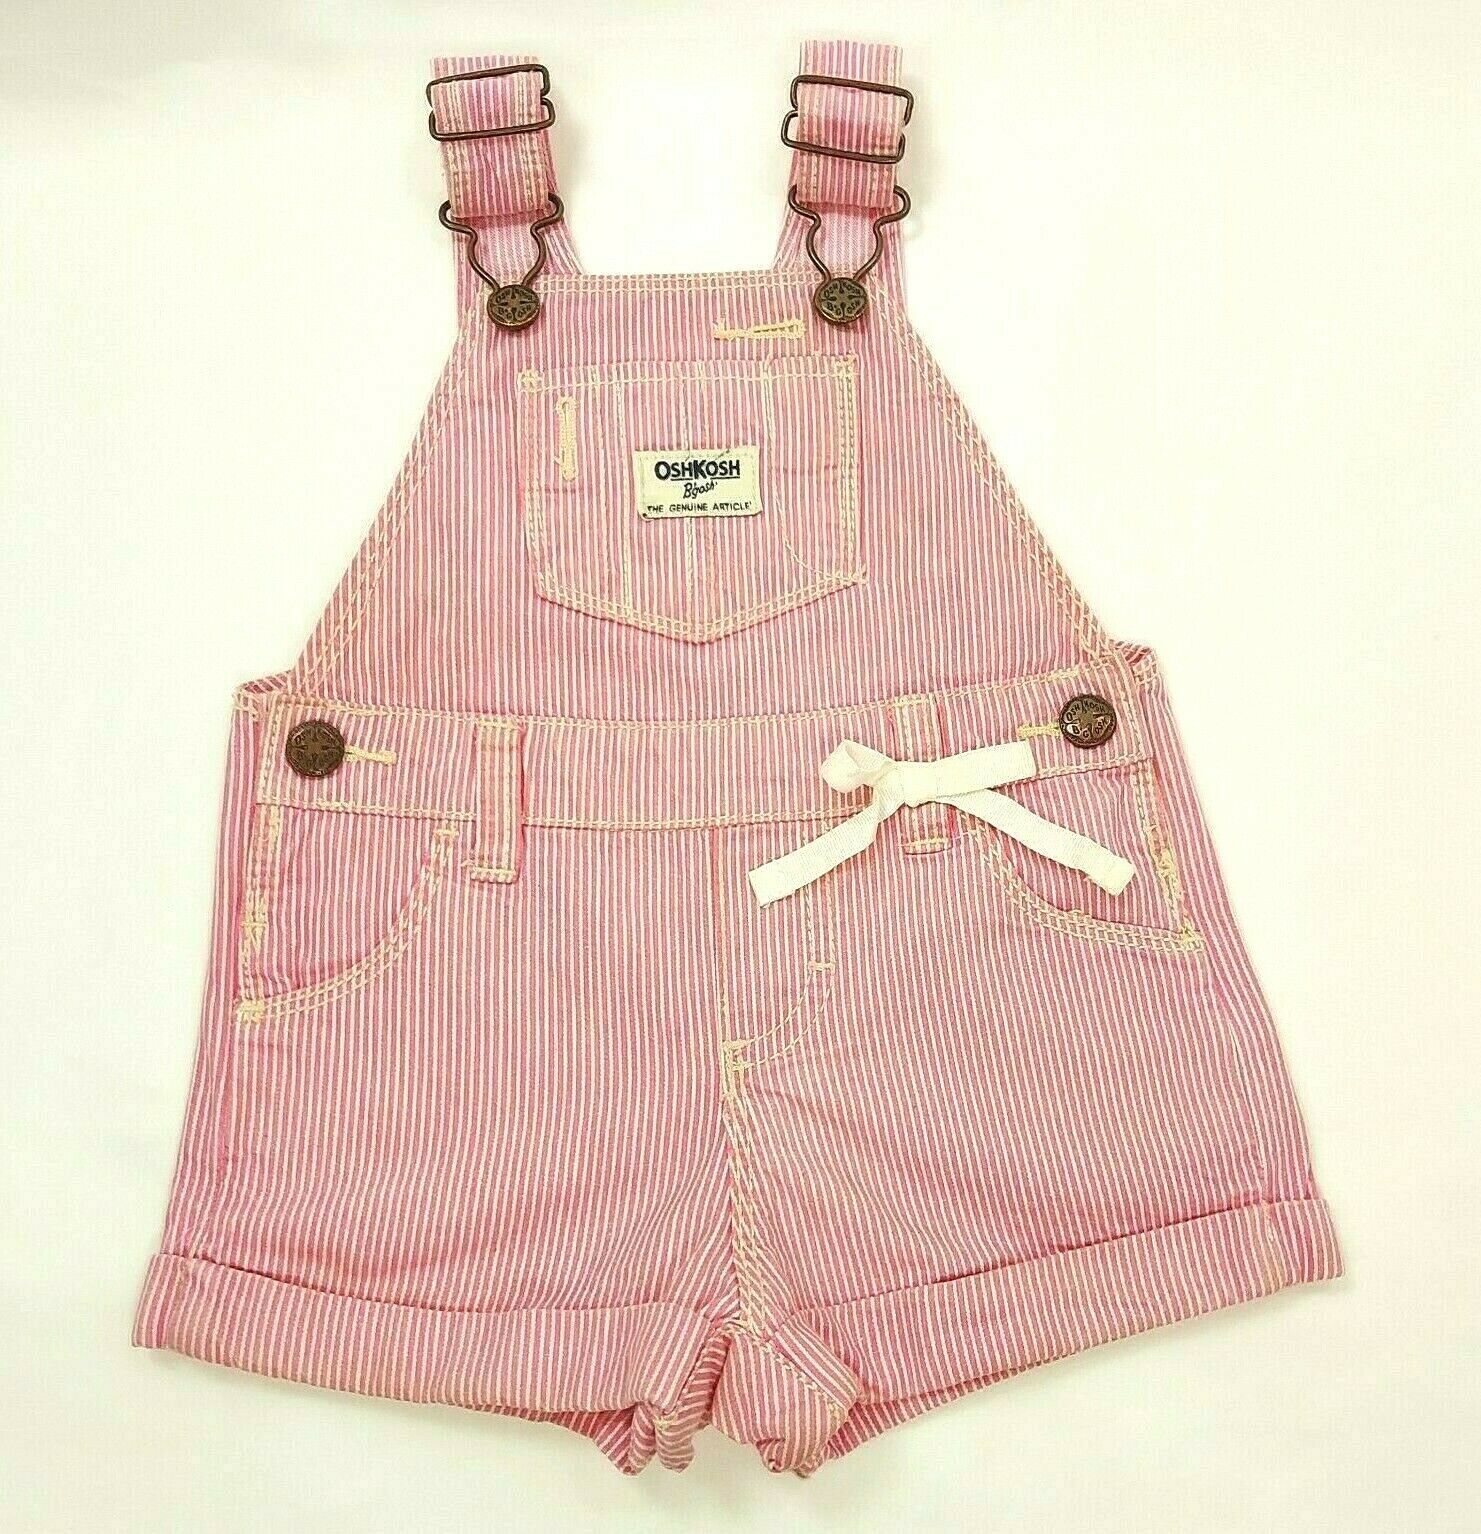 OshKosh B'gosh Girl Short Vestback Overall Stripped Pink/White W/White Ribbon 9M - $18.75